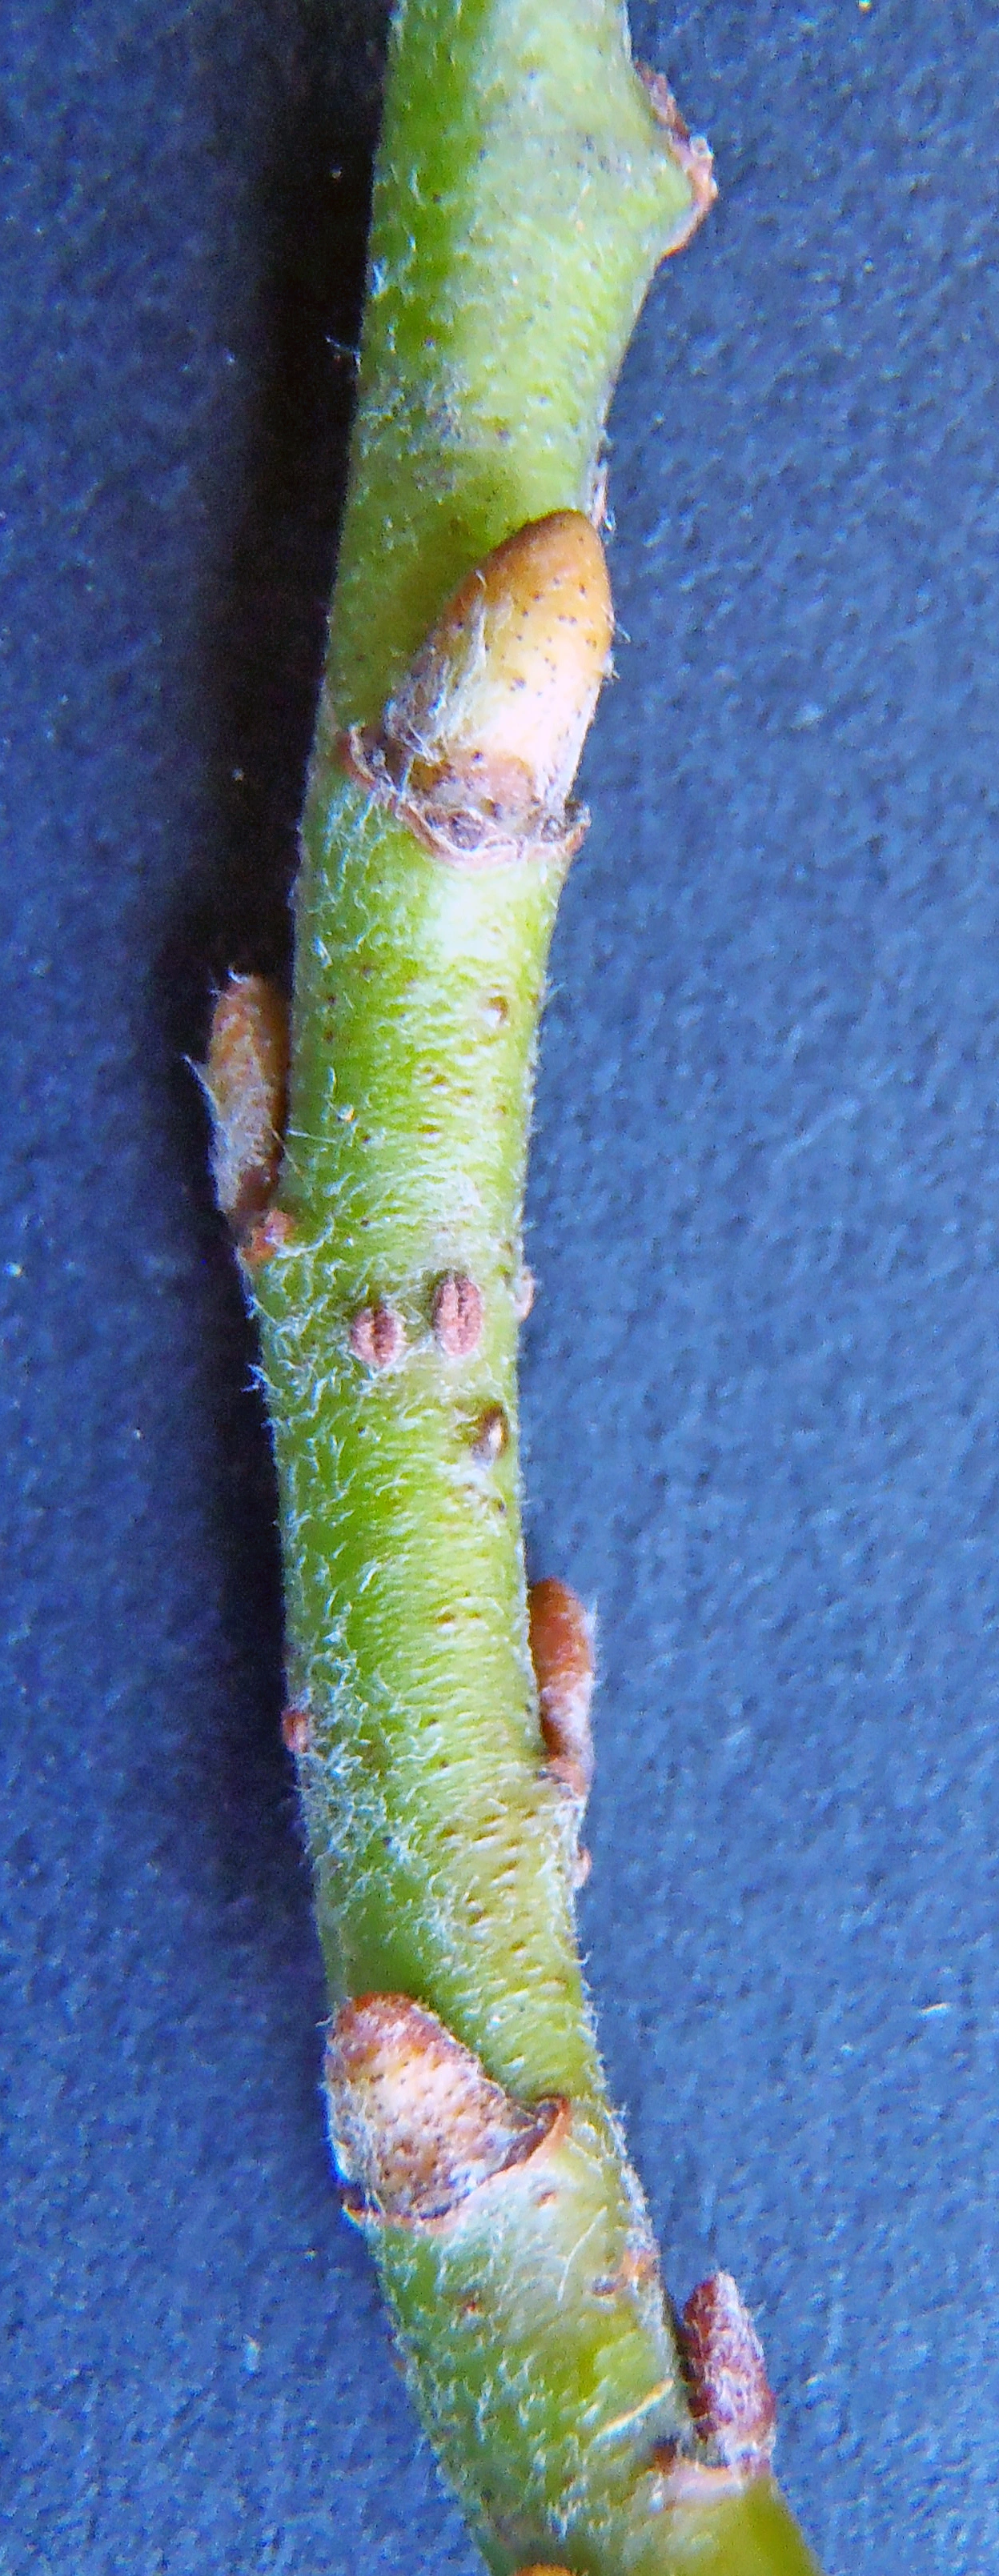 Tofrøbladete planter: Salix ×boydii.